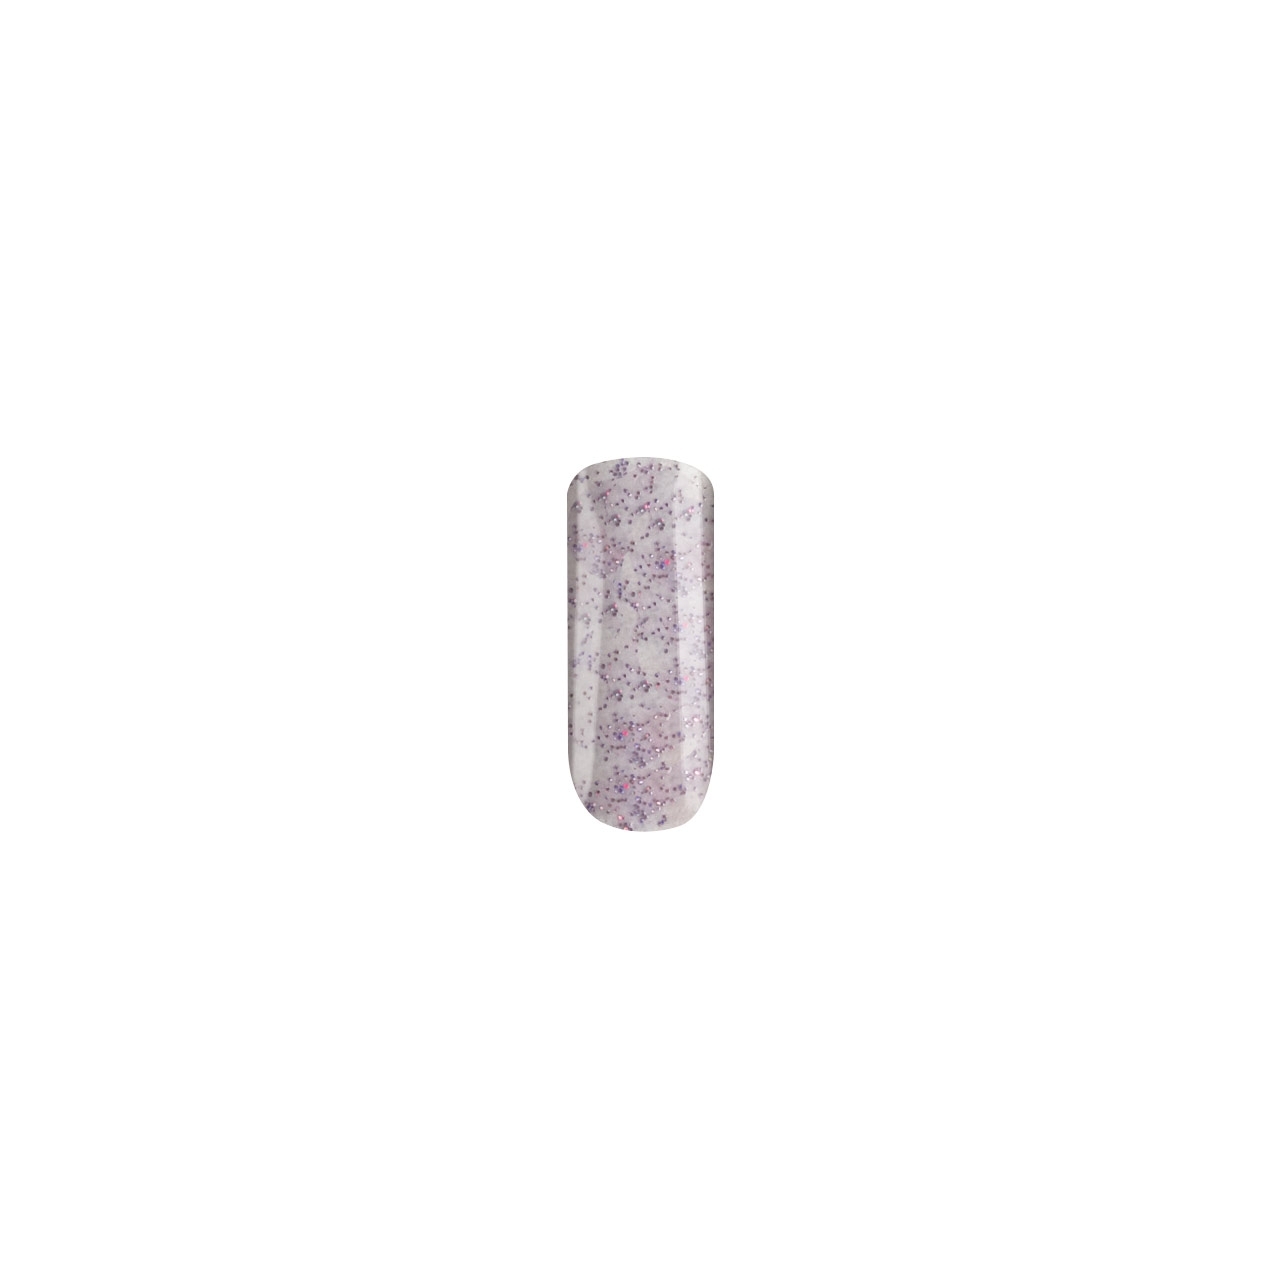 BAEHR BEAUTY CONCEPT - NAILS Nagellack aubergine glitter 11 ml